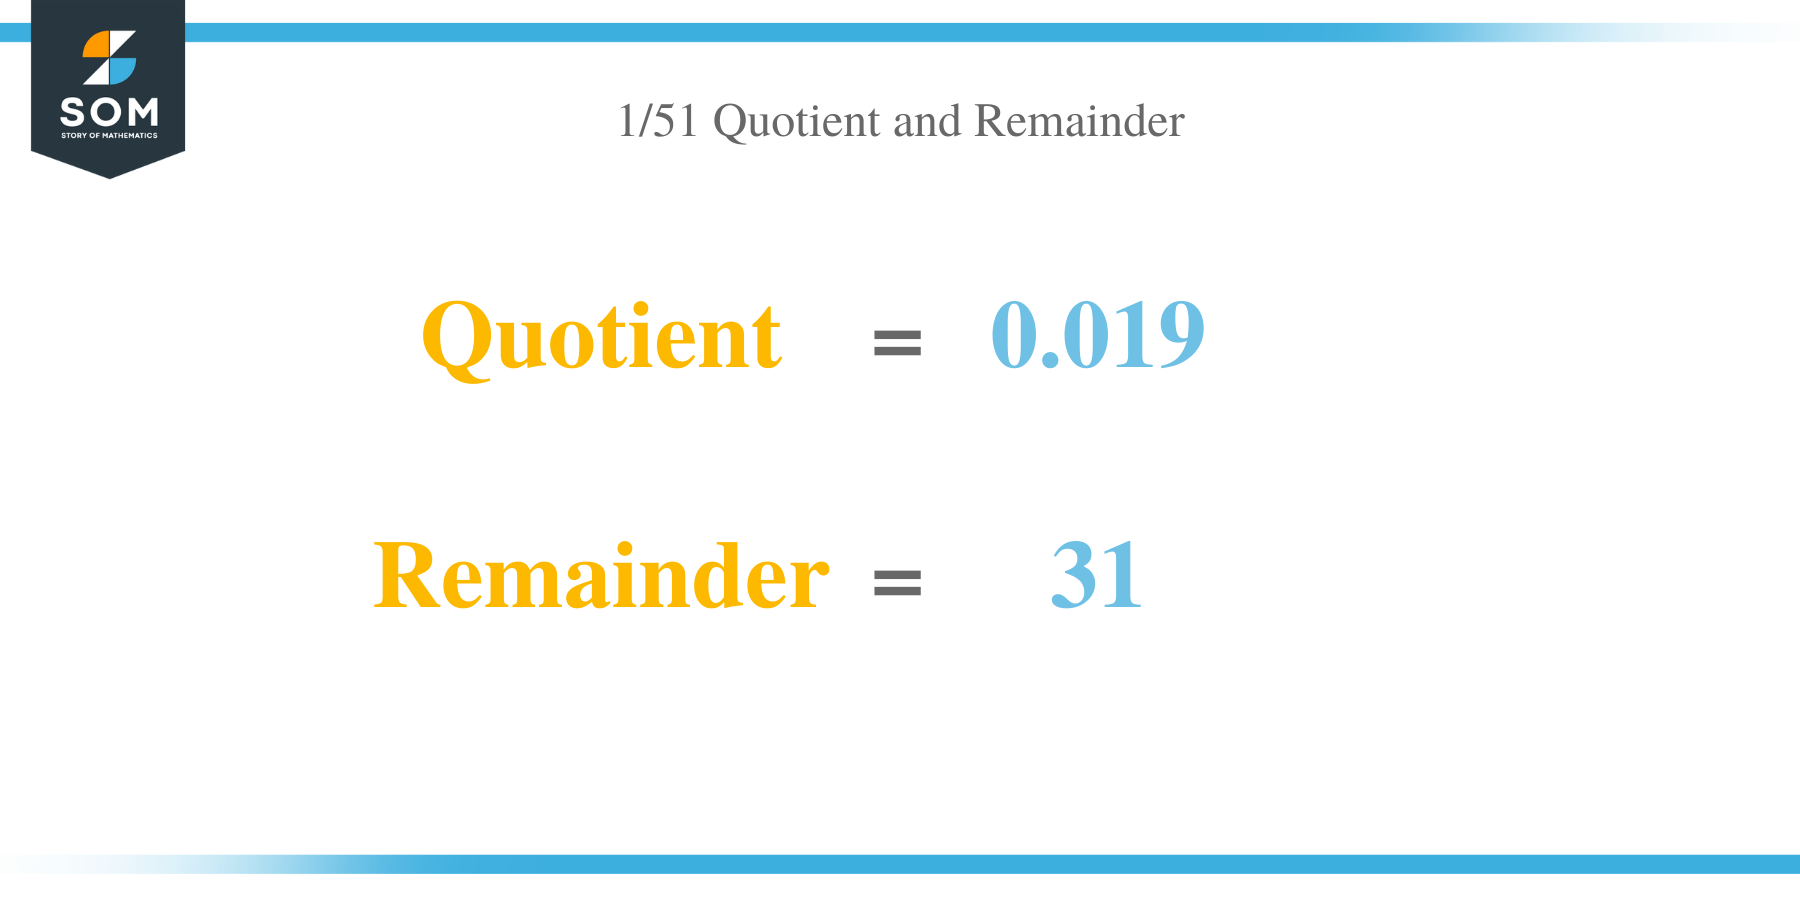 Quotient and Remainder of 1 per 51